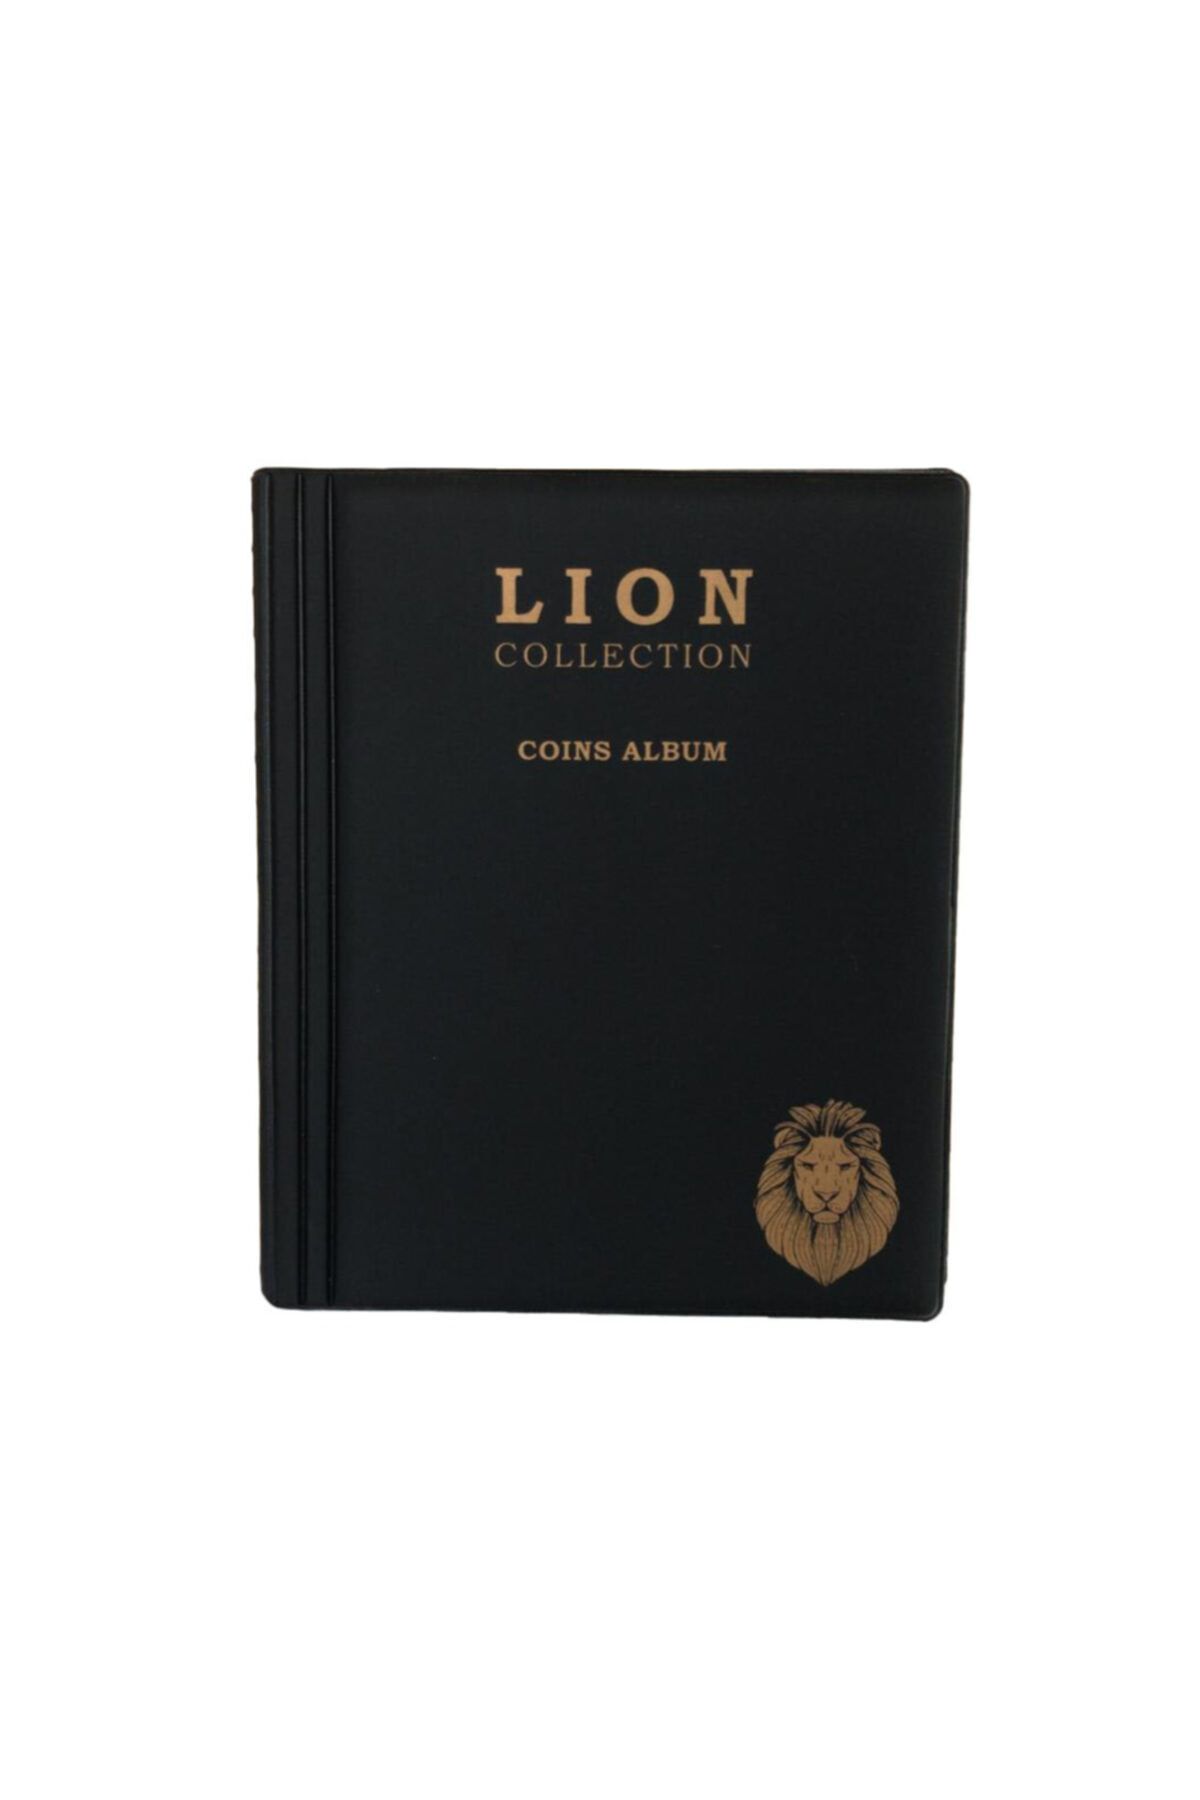 Lion Marka Madeni Para Cep Albümü 10 Sayfa - 120 Cepli - Siyah